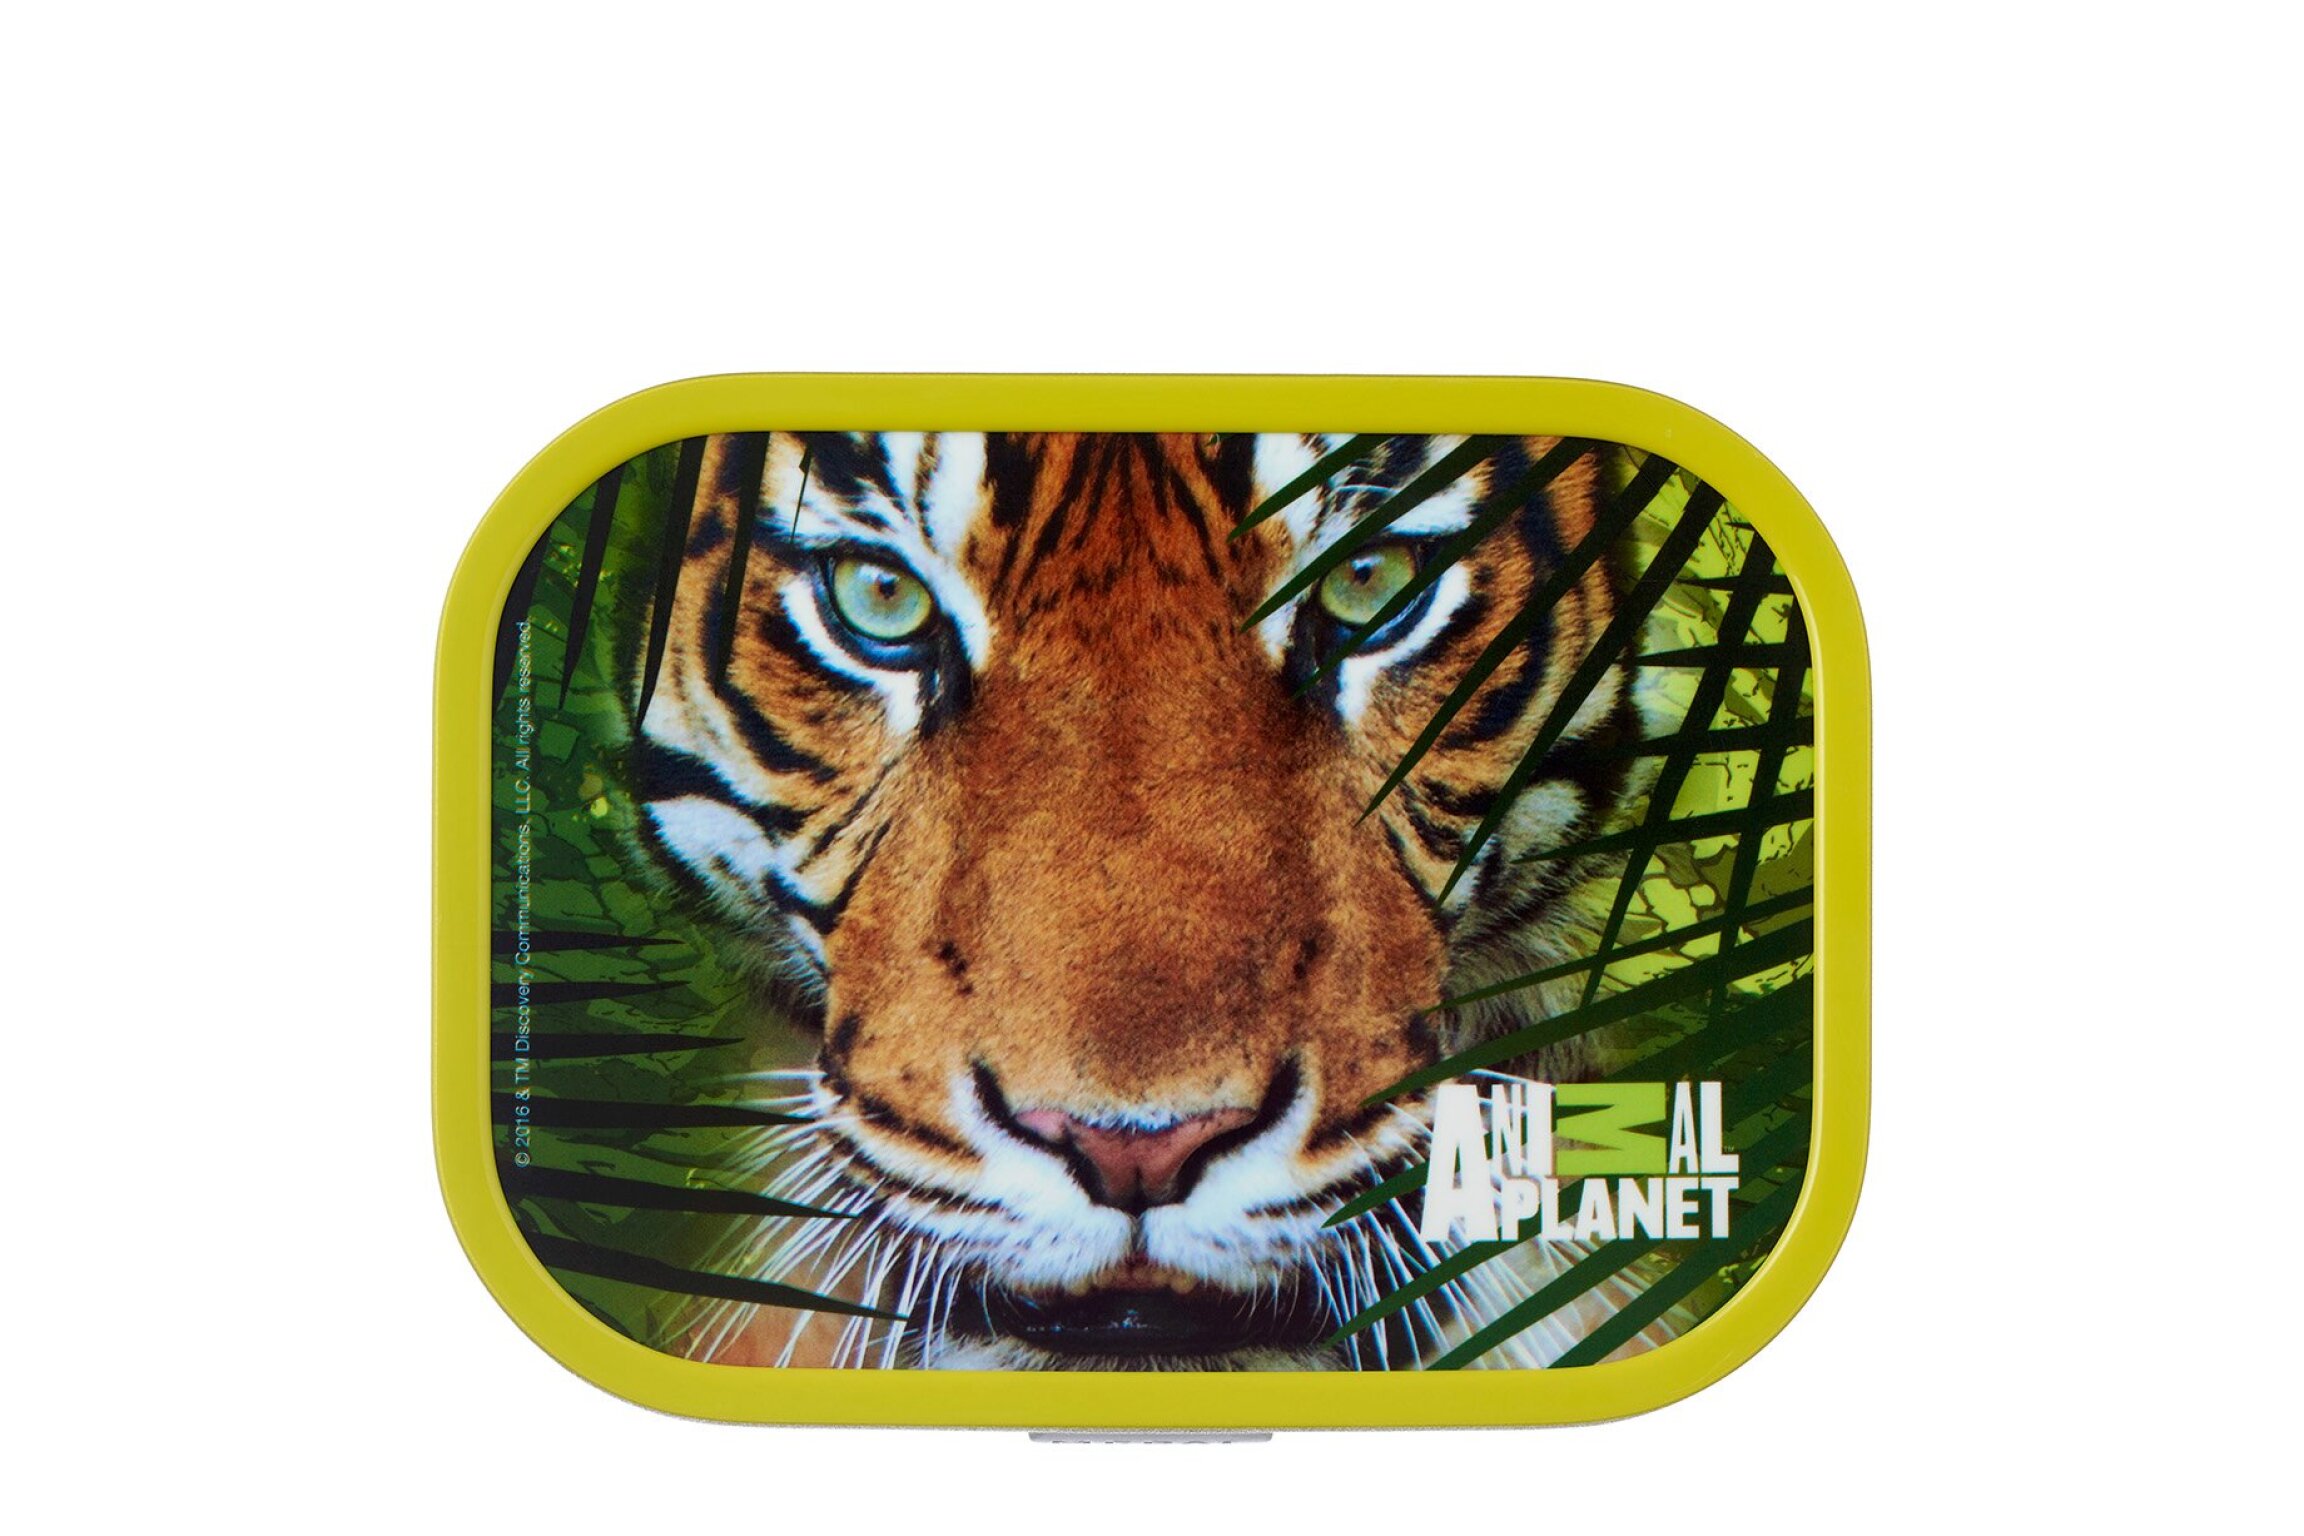 brotdose campus - animal planet tiger